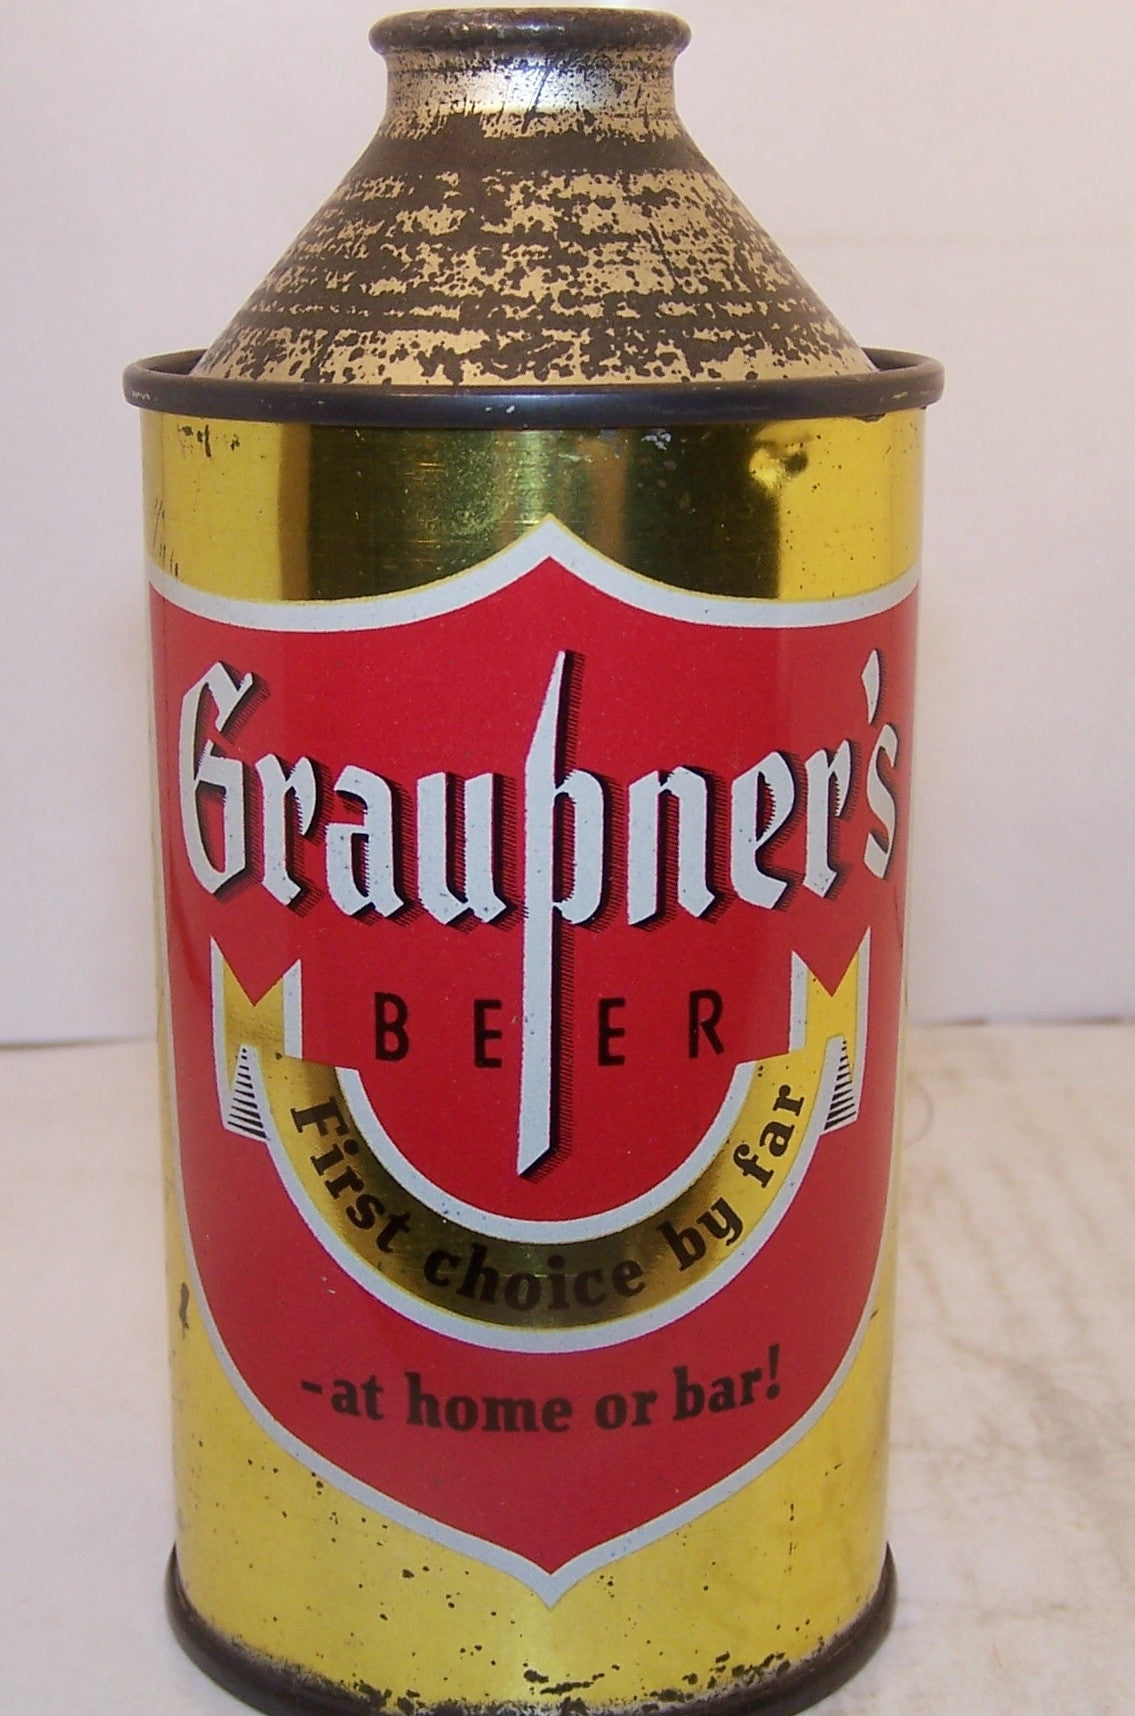 Graupner's Beer "At home or Bar" USBC 167-28 Grade 1 Sold on 06/16/16